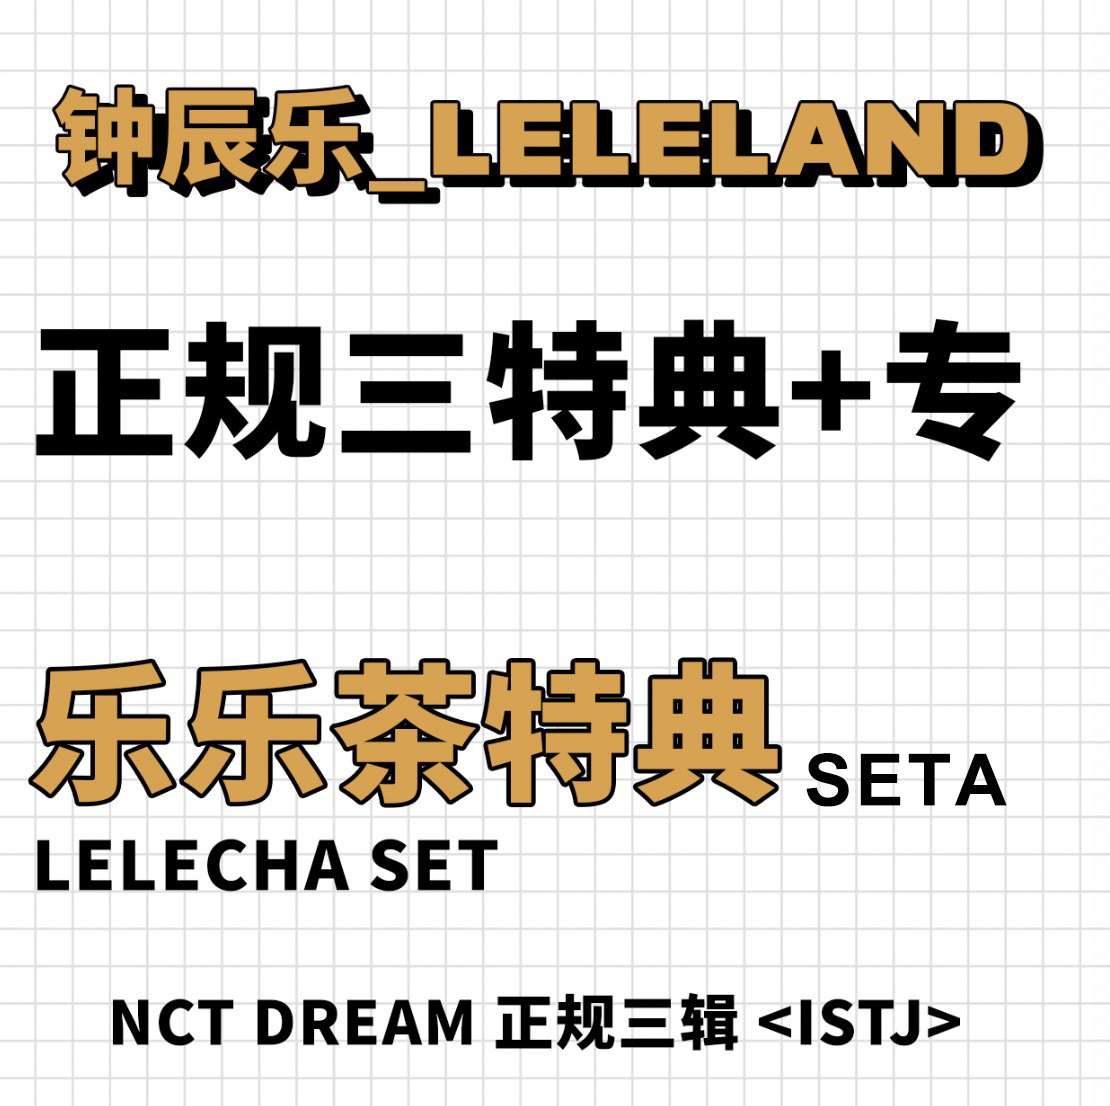 [全款 乐乐茶seta特典专] NCT DREAM - 正规3辑 [ISTJ]_钟辰乐吧_ChenLeBar